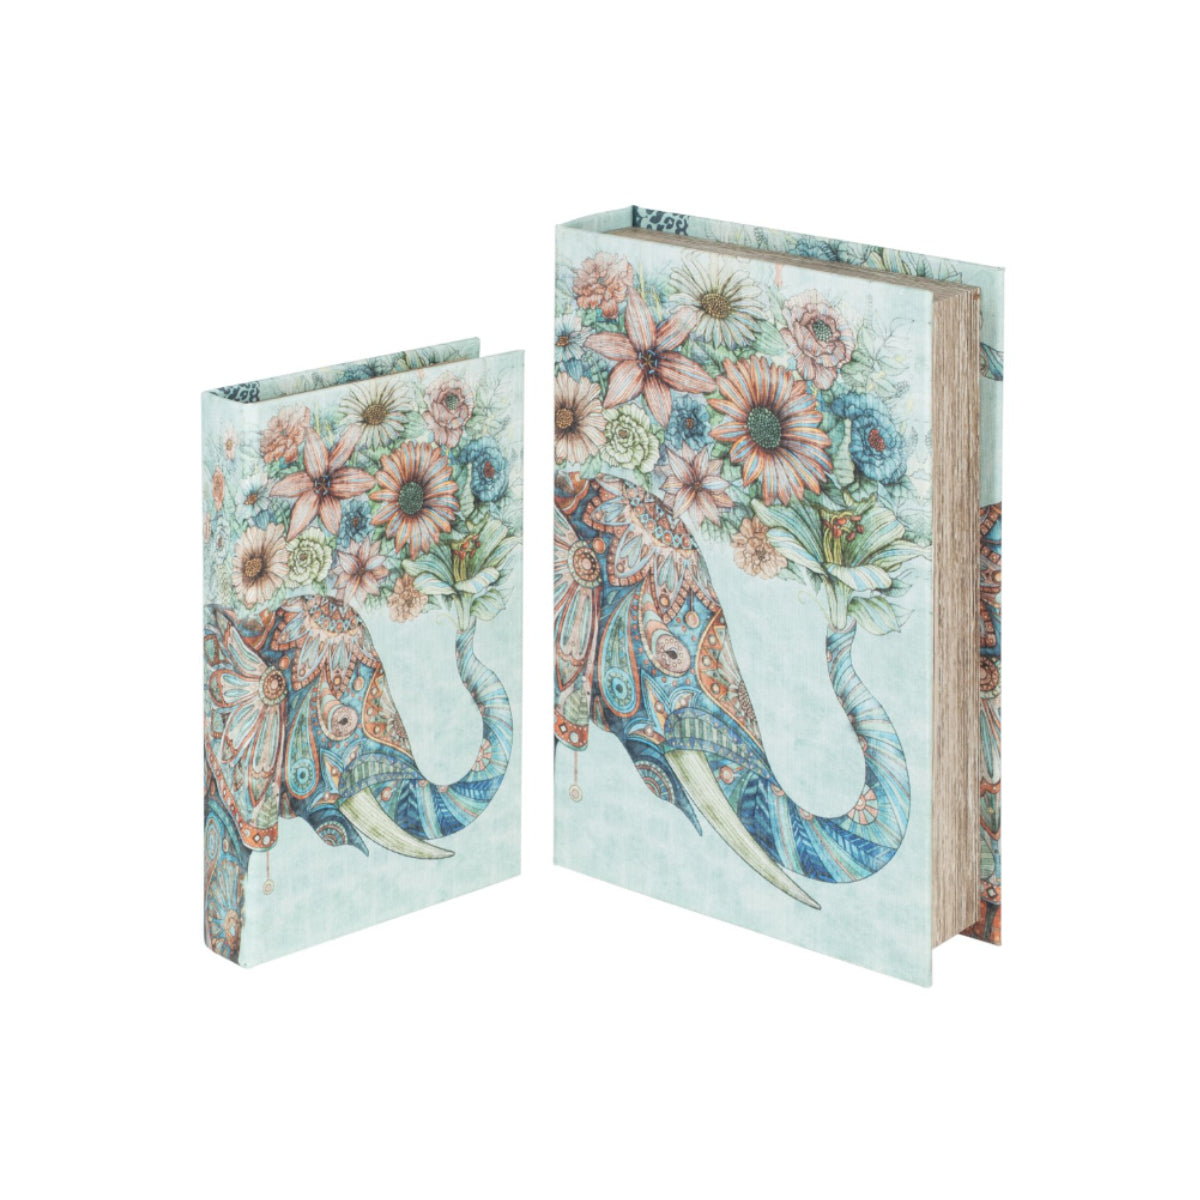 Caja de libro de elefante